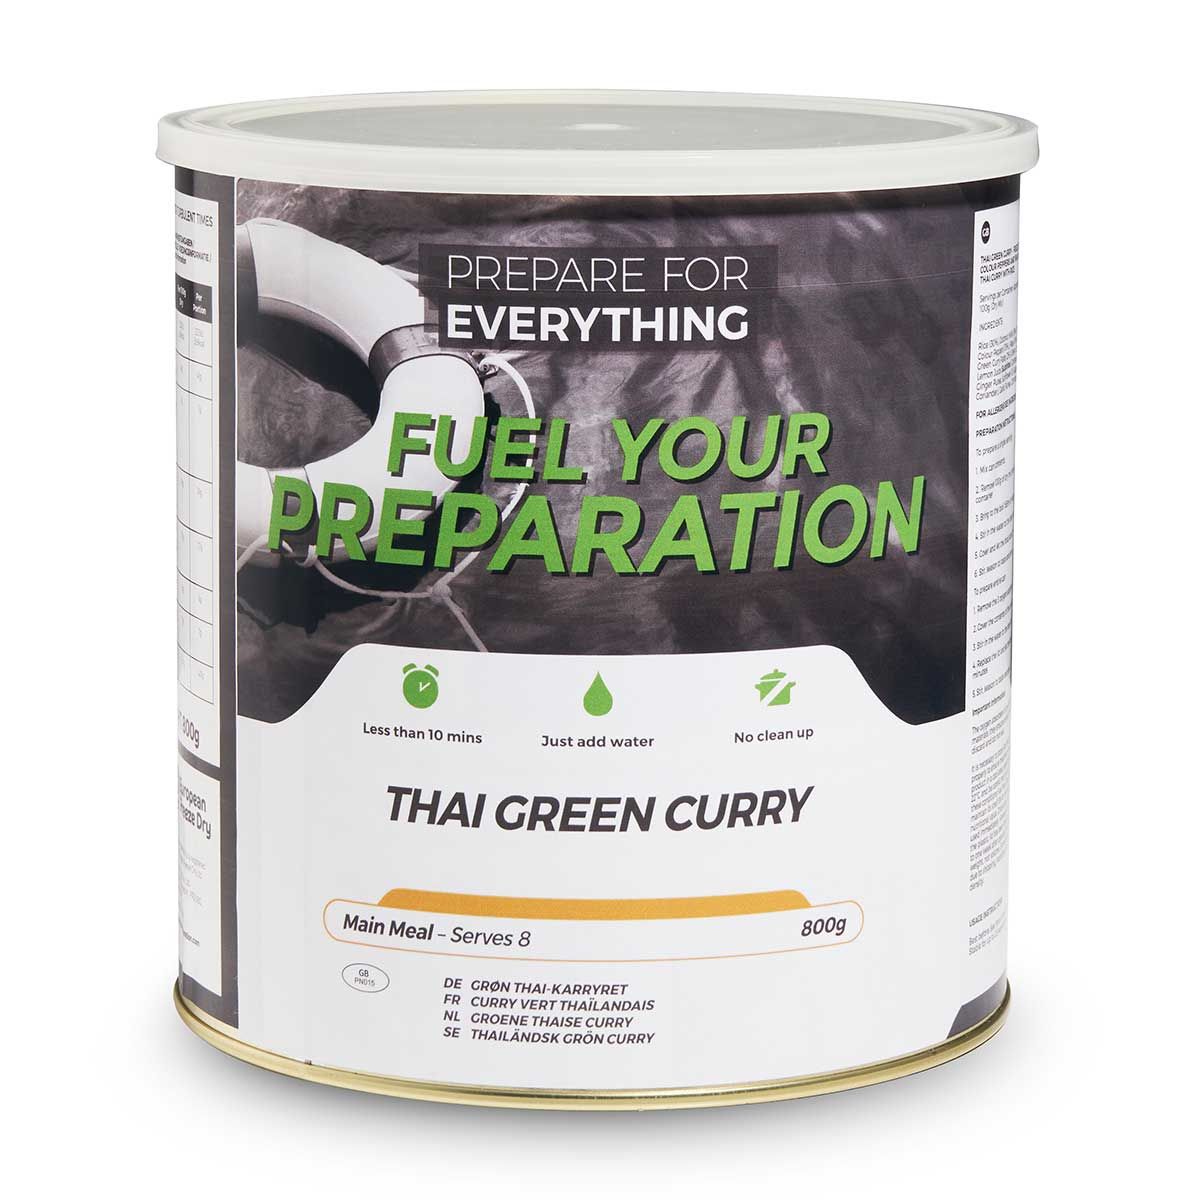 Thaï green curry - 25 years